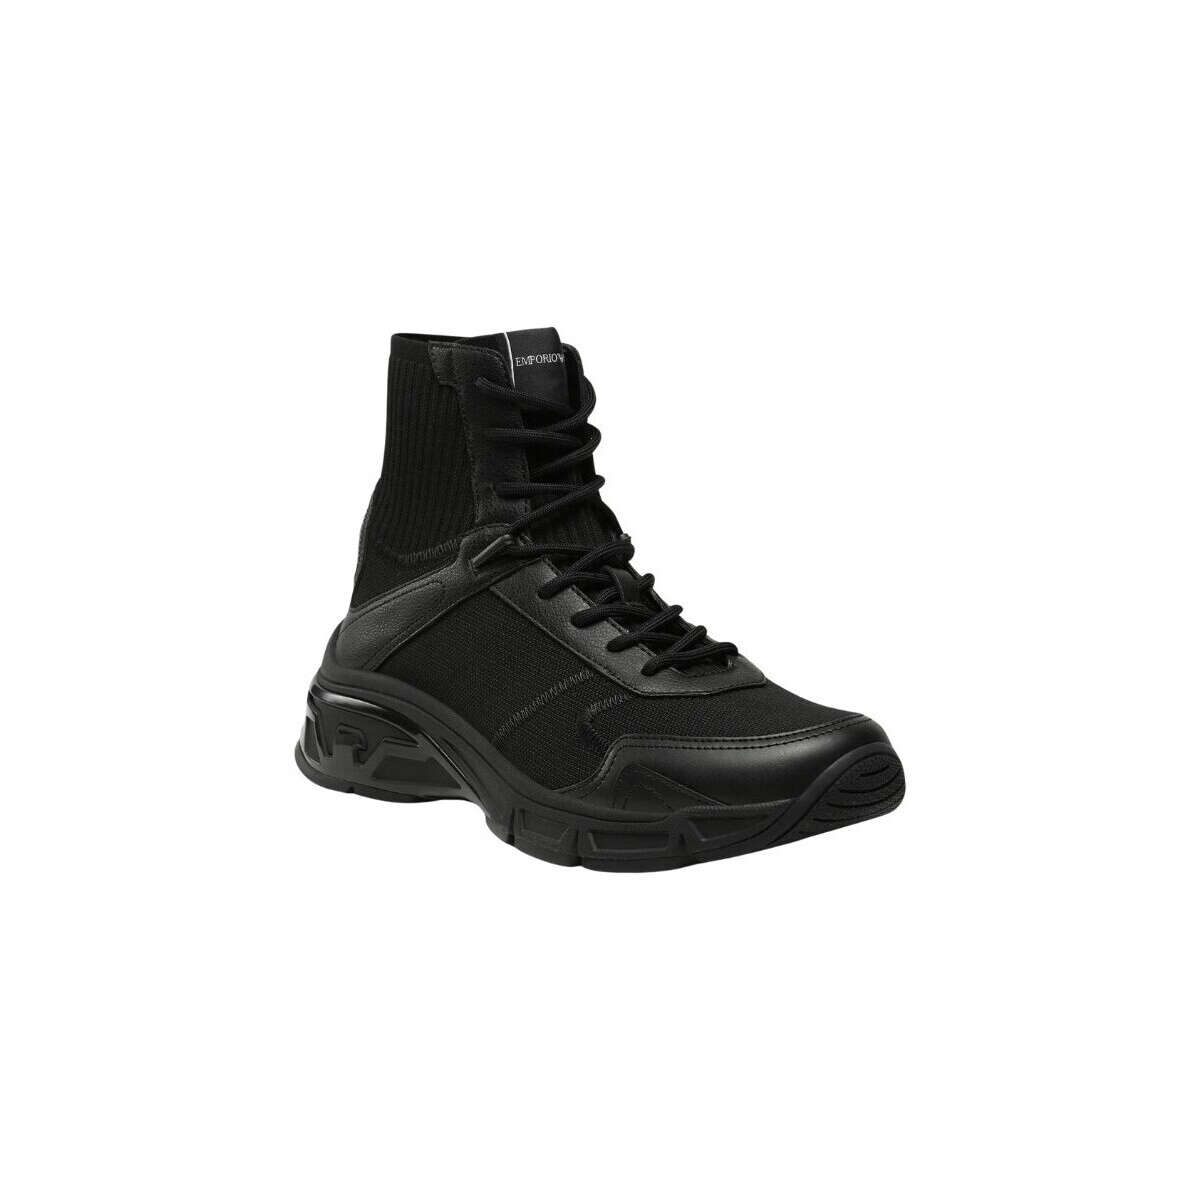 Chaussures Homme Baskets montantes Emporio Armani  Noir